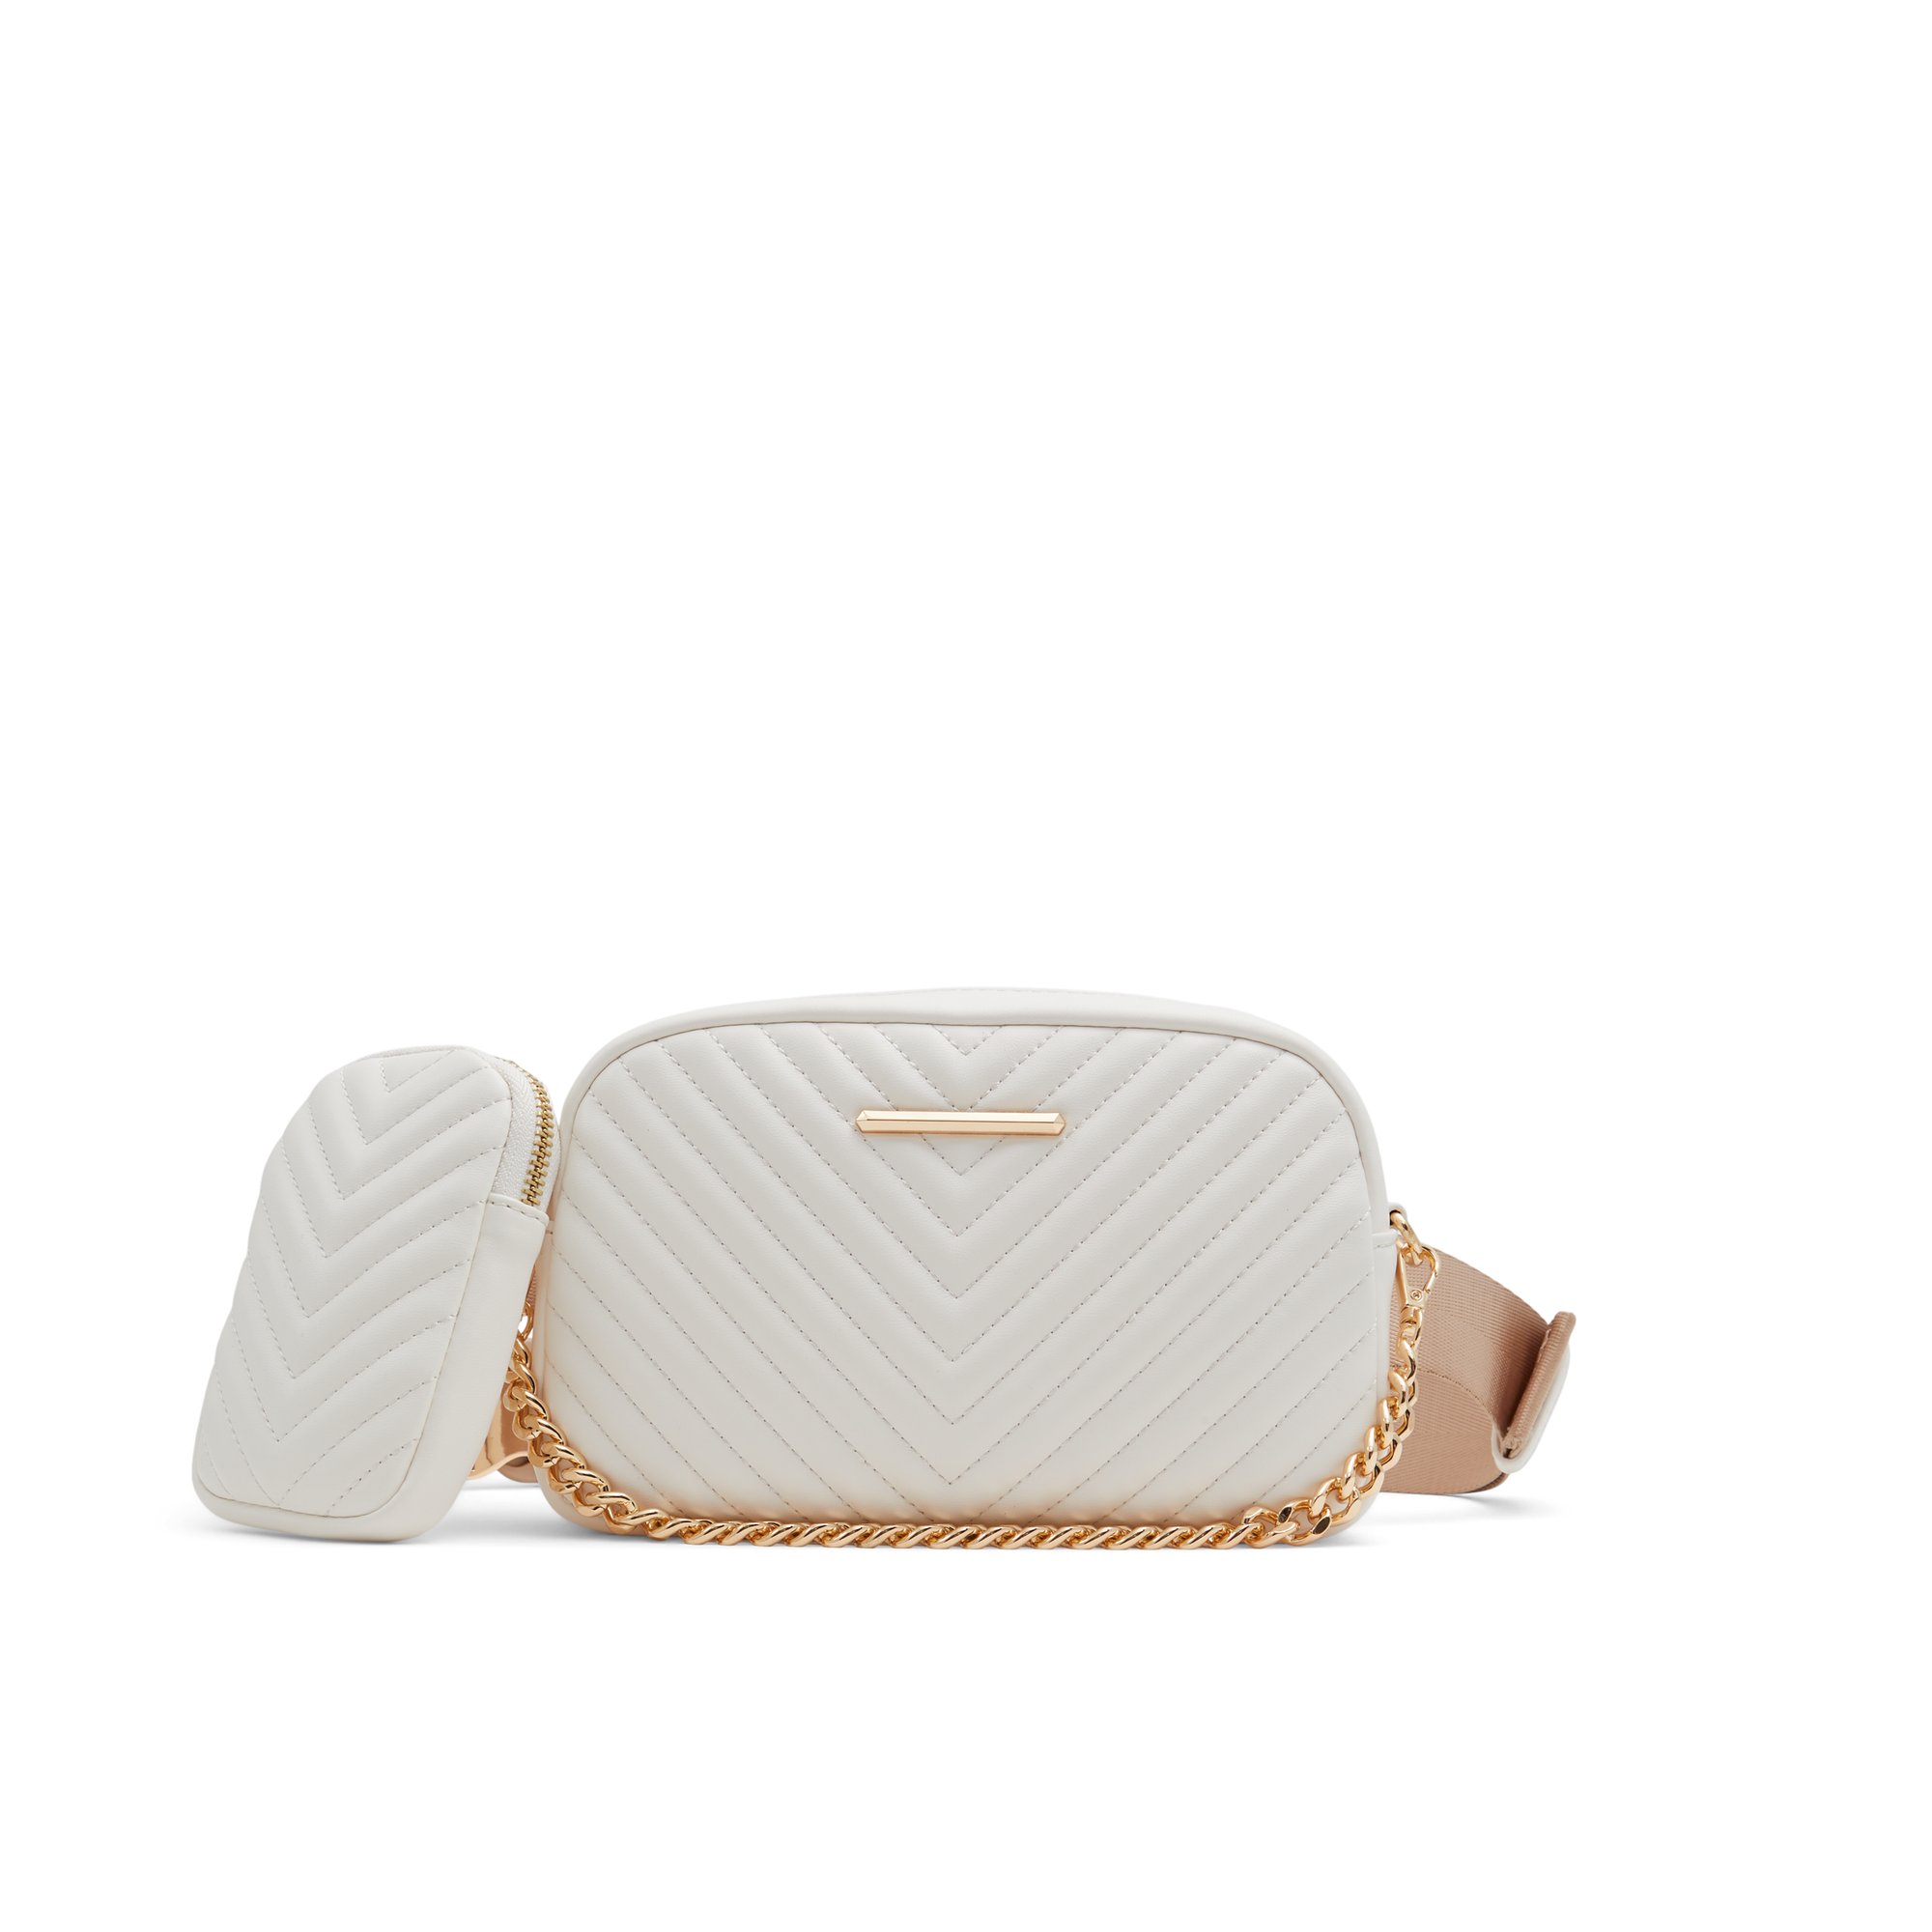 ALDO Zinkax - Women's Backpack Handbag - White